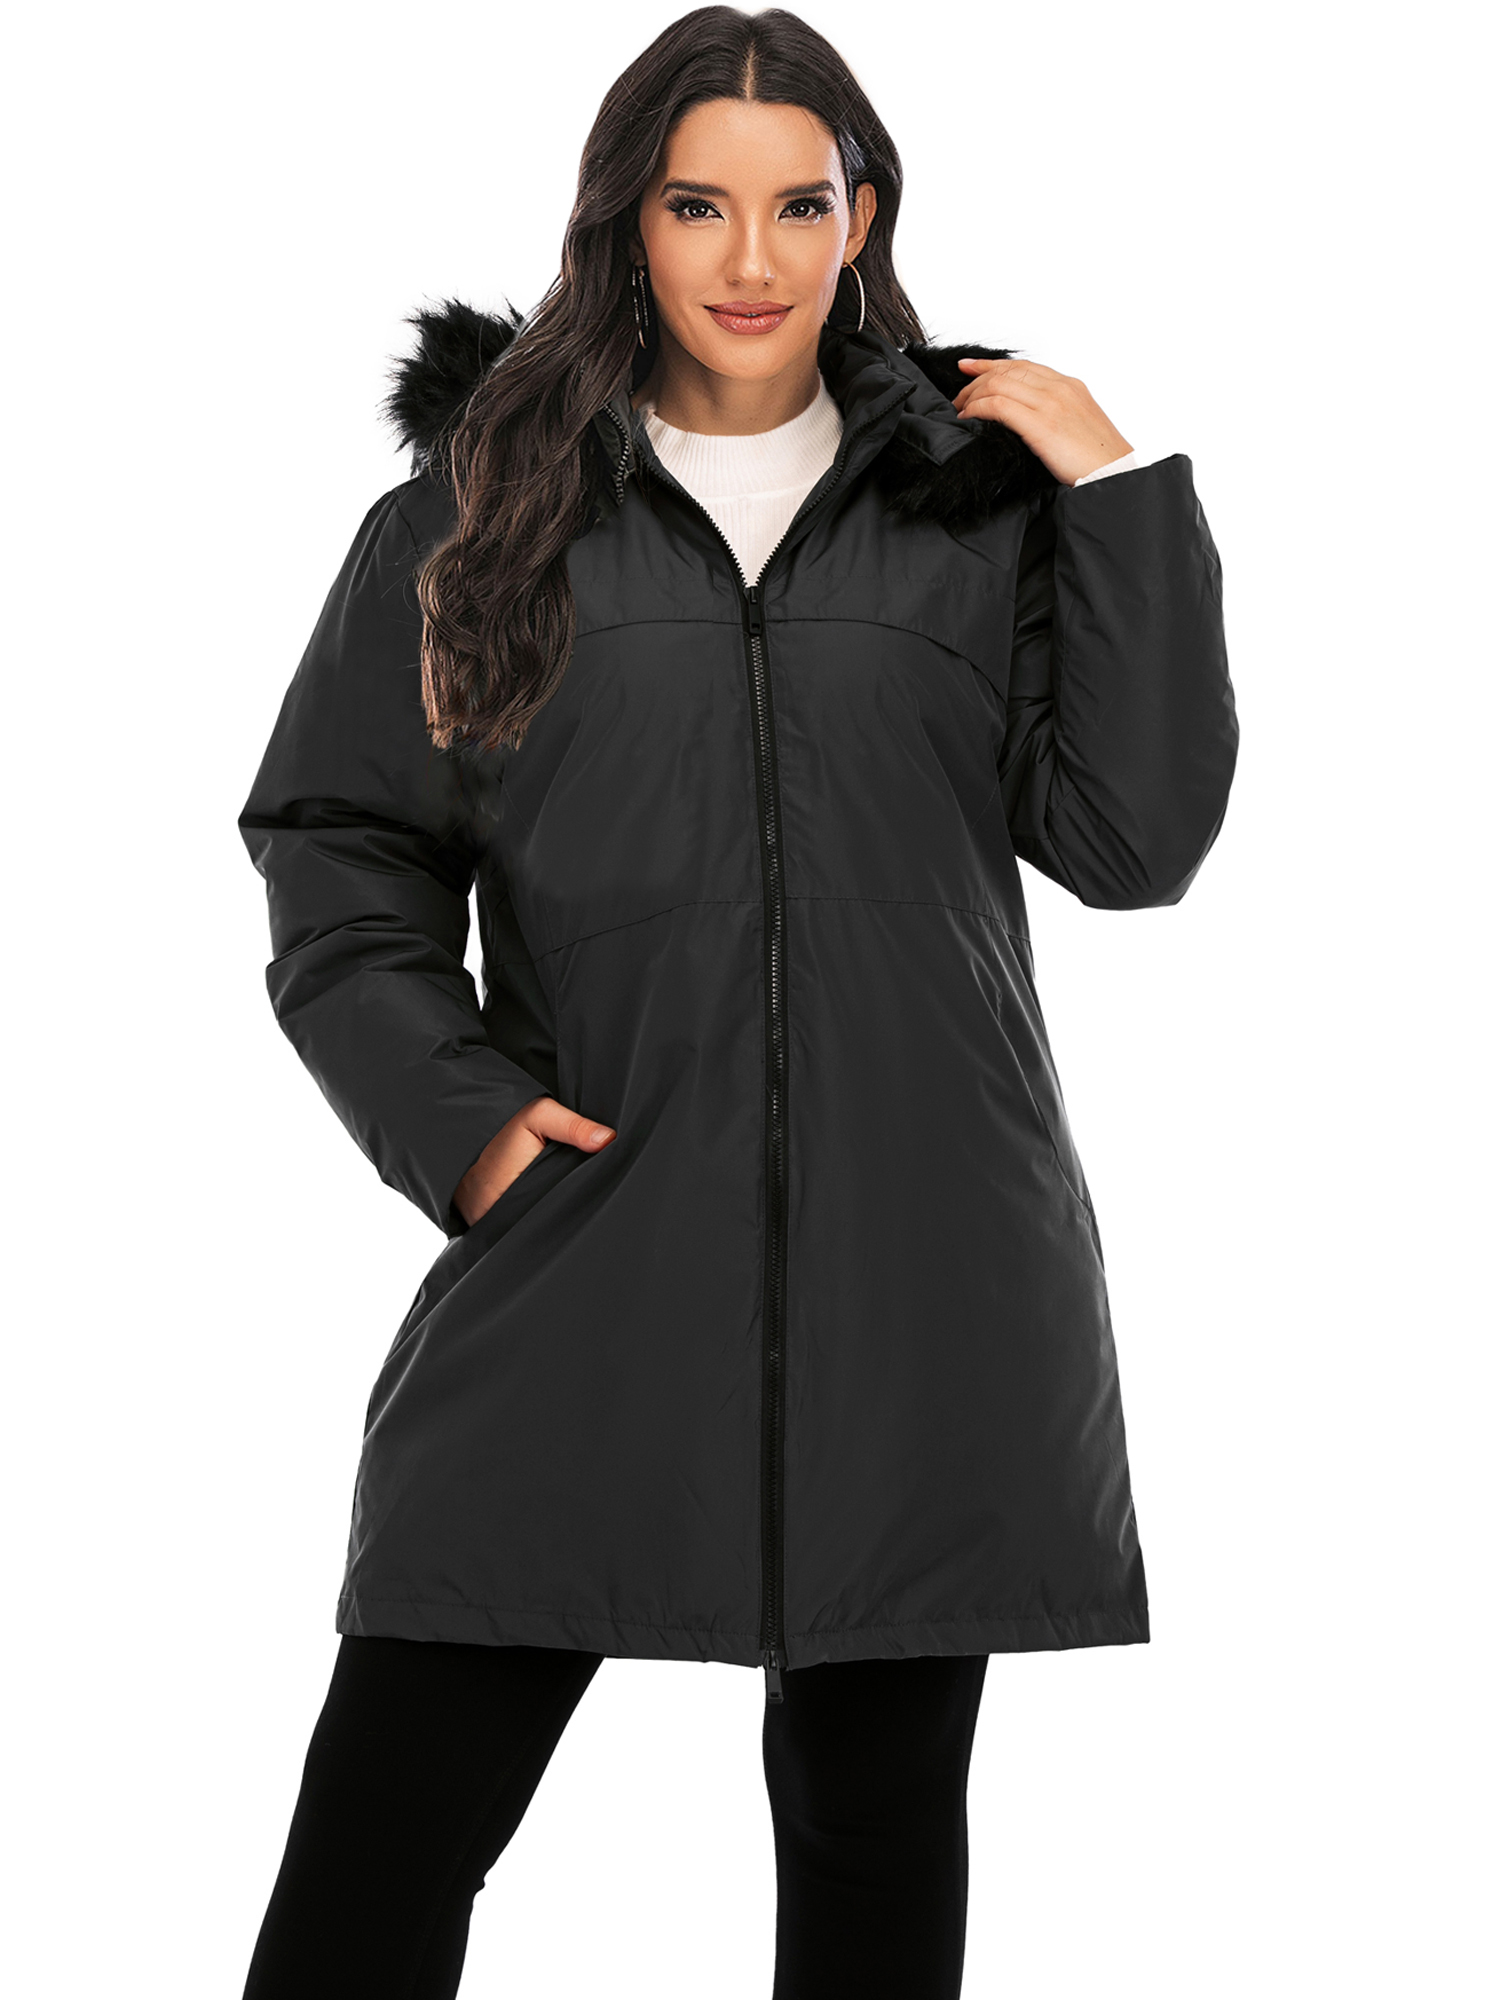 LELINTA Winter Plus Size Long Hoodie Coat Warm Jacket for Women, Zipper Parka Overcoats Raincoat Active Outdoor Trench Coat - image 1 of 7